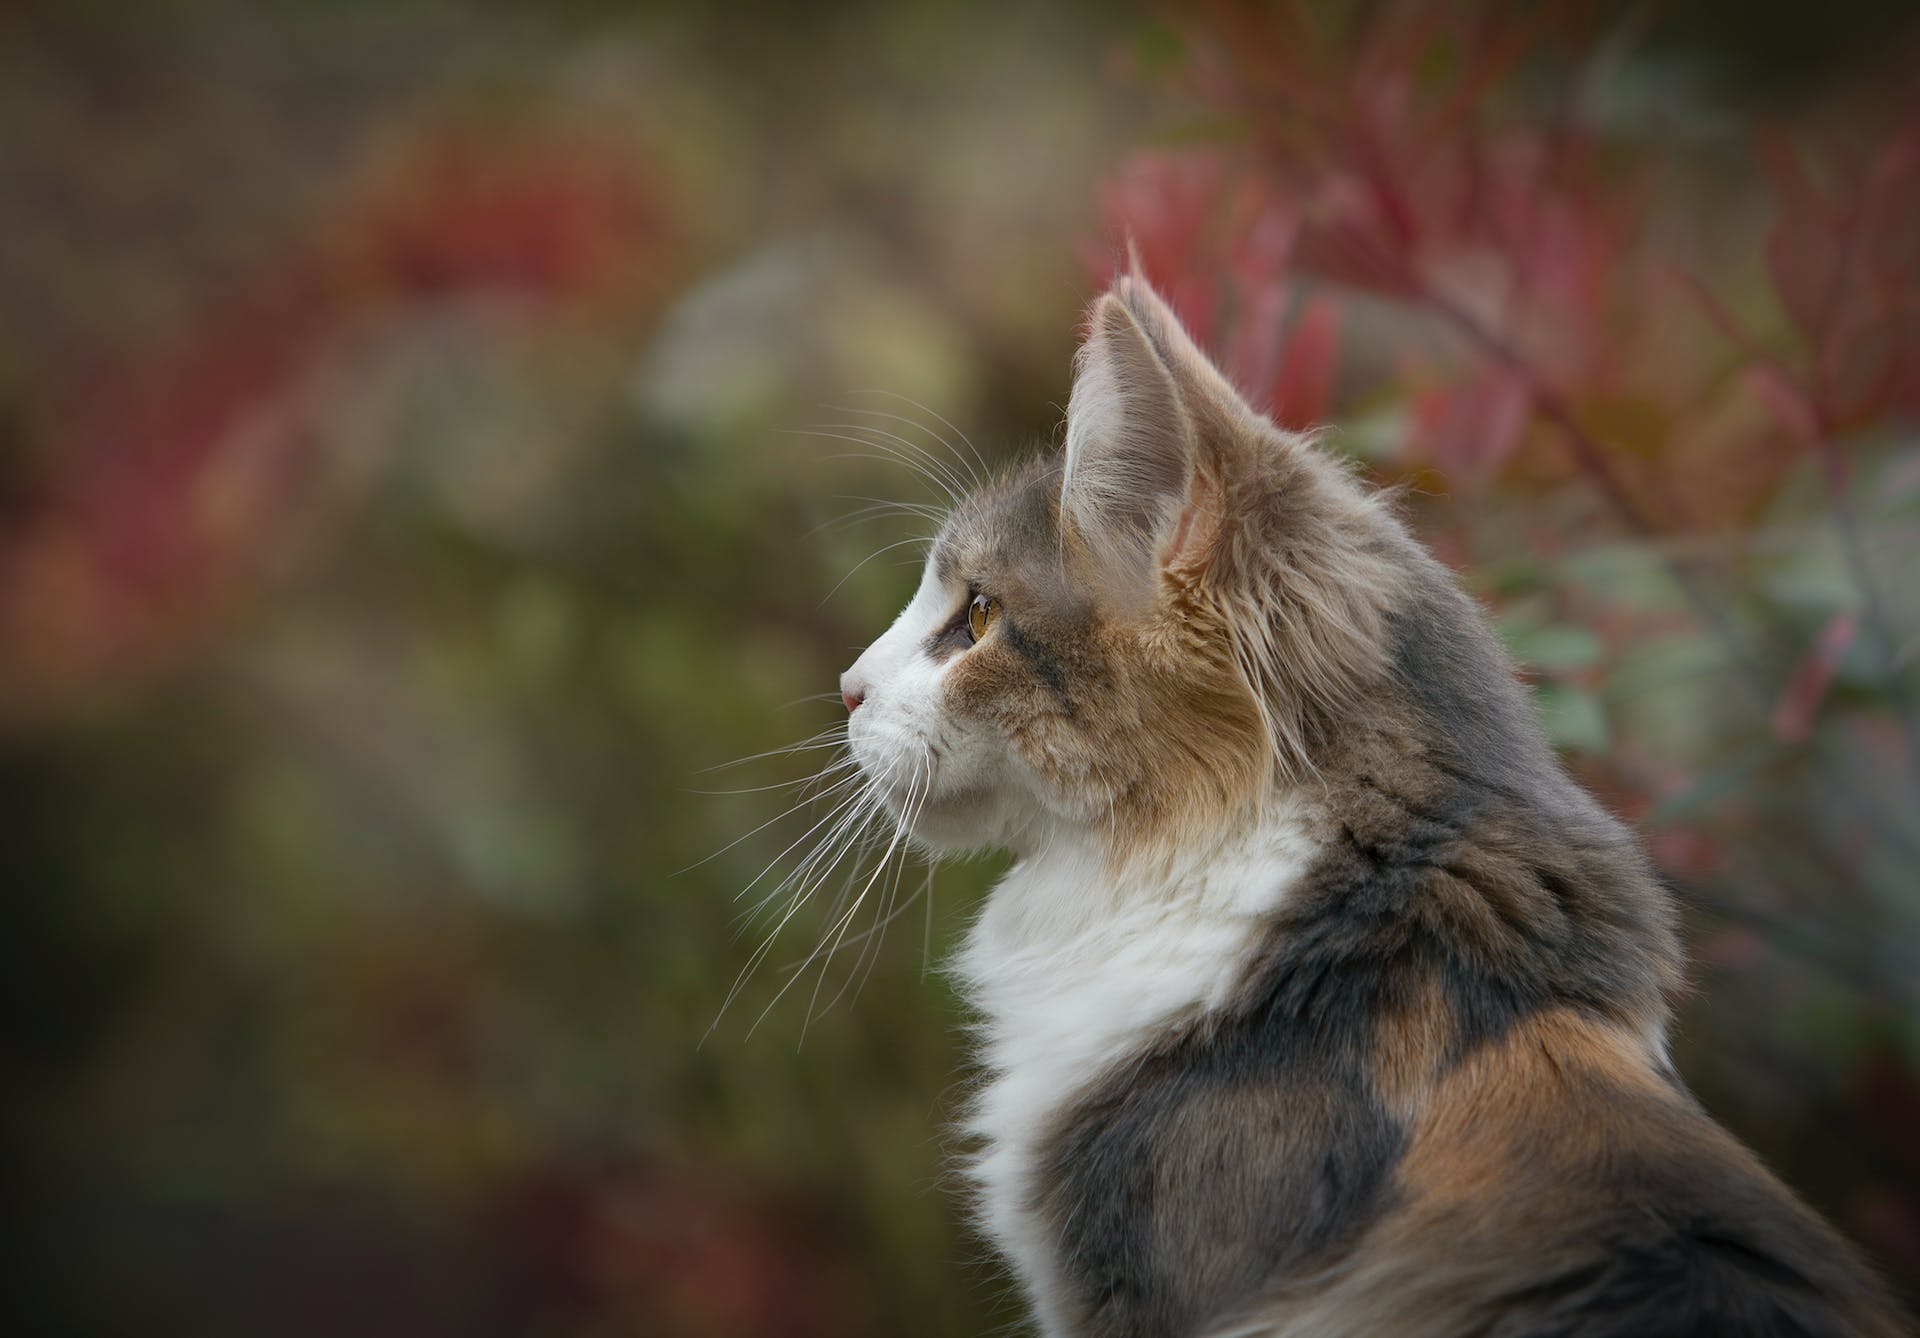 A cat sitting outdoors in a garden